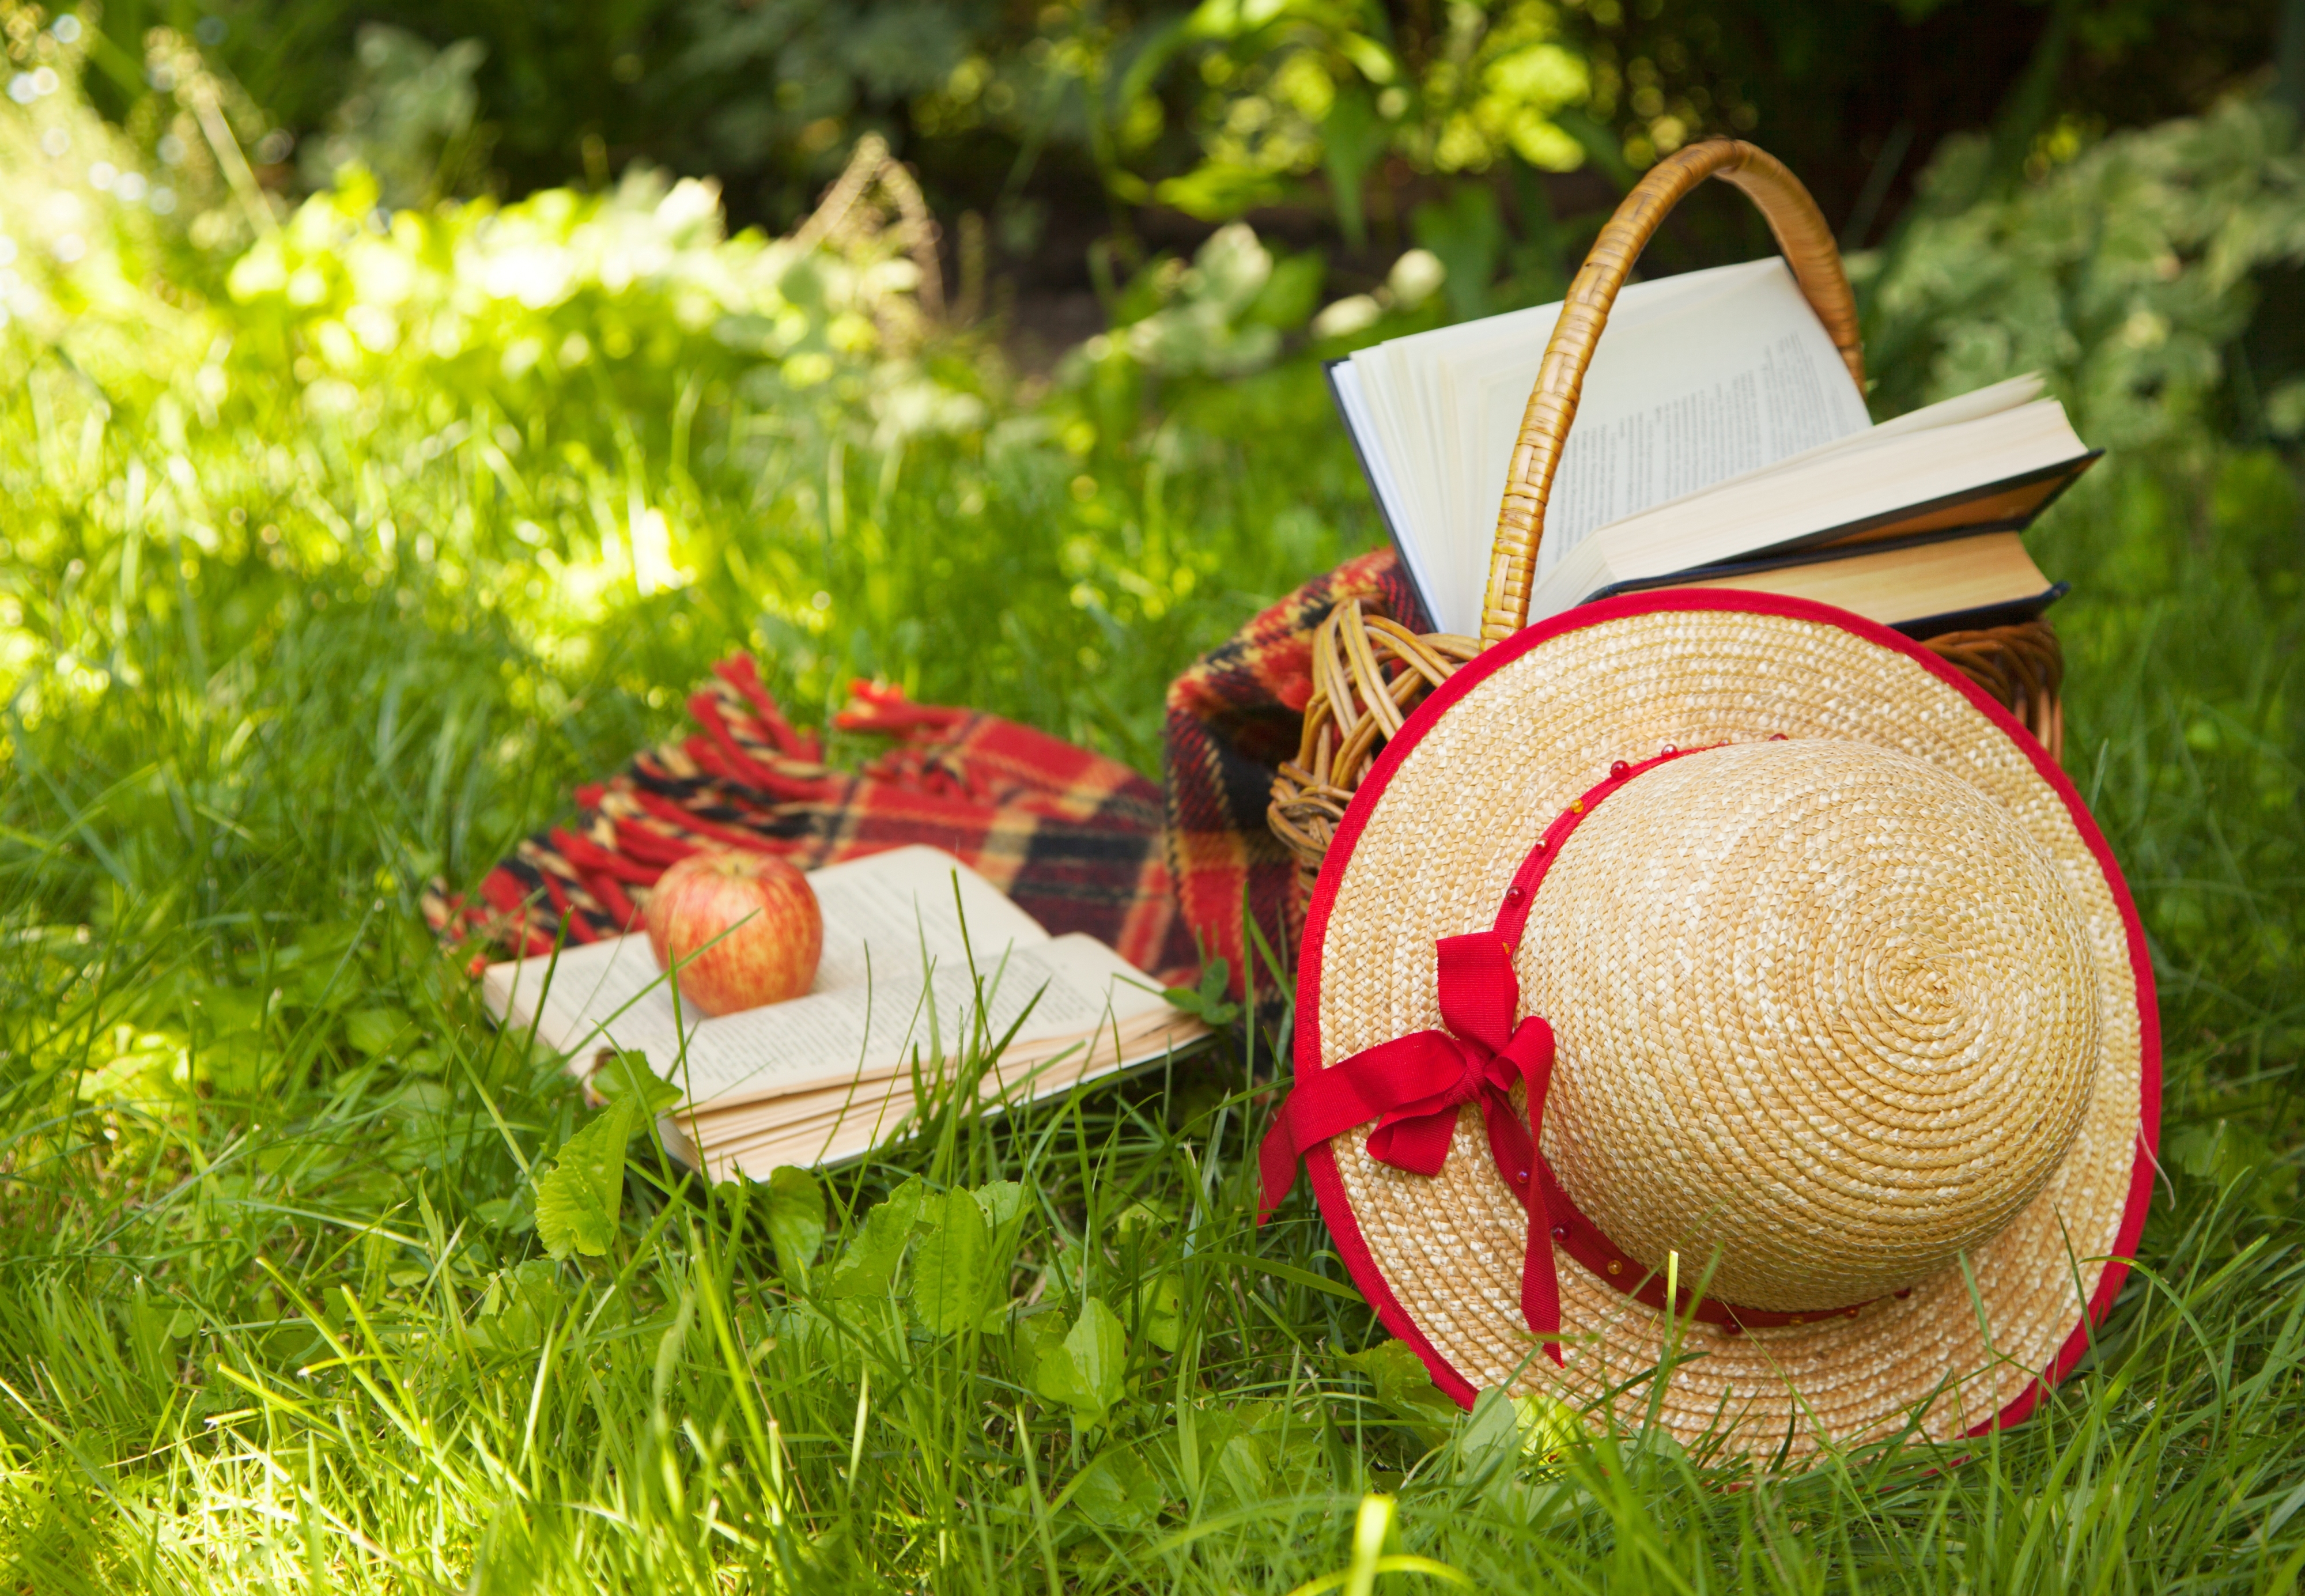 Корзина шляпа. Летние атрибуты. Корзинка для пикника на природе. Лето с книгой. Летний пикник на природе.